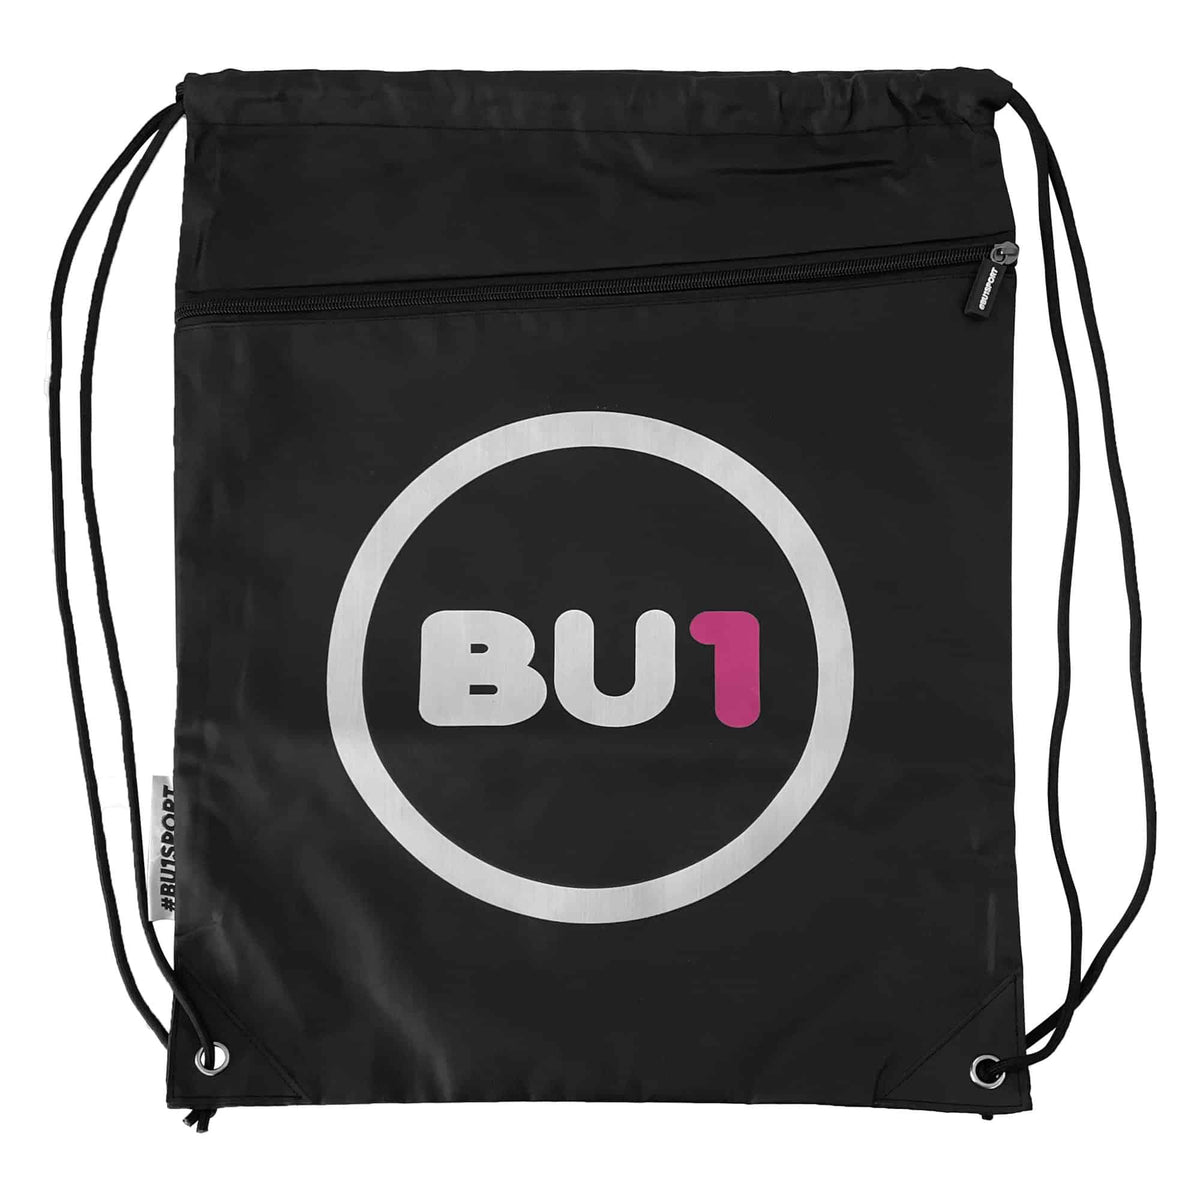 BU1 bag